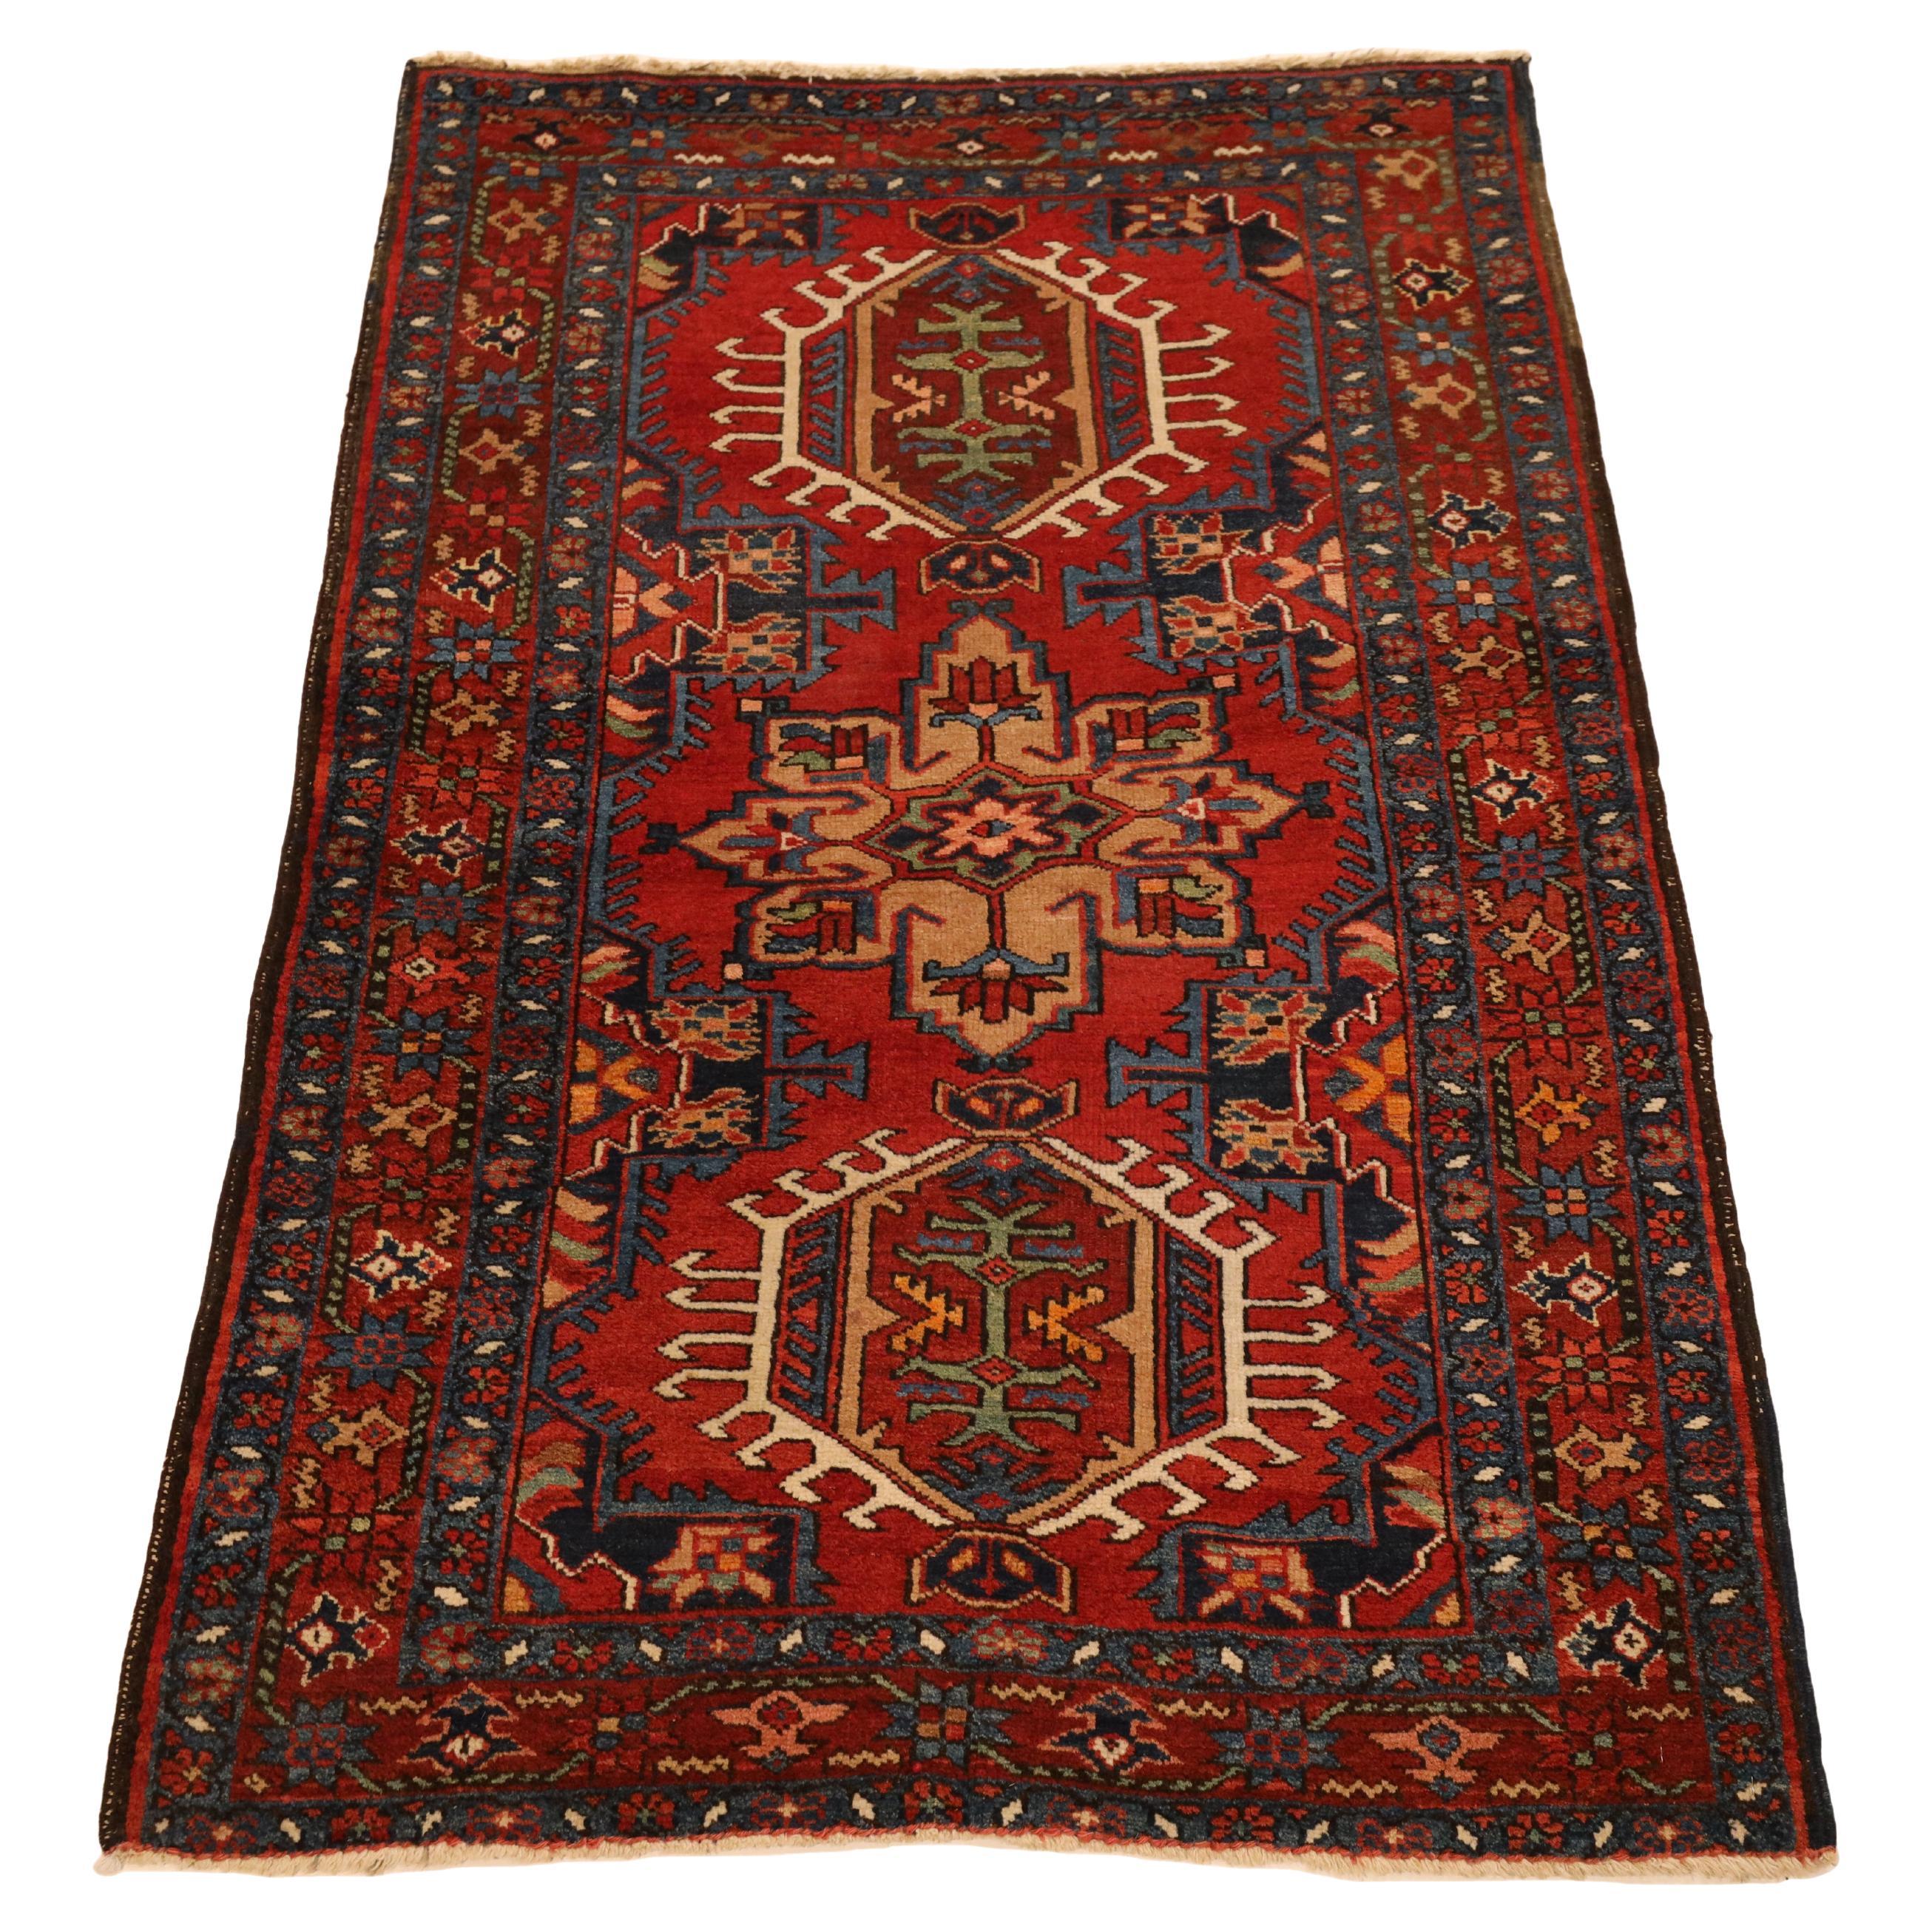 N.W. Persian Semi-Antique rug, Red Beige Sea-Green - 3'2" x 4'7"